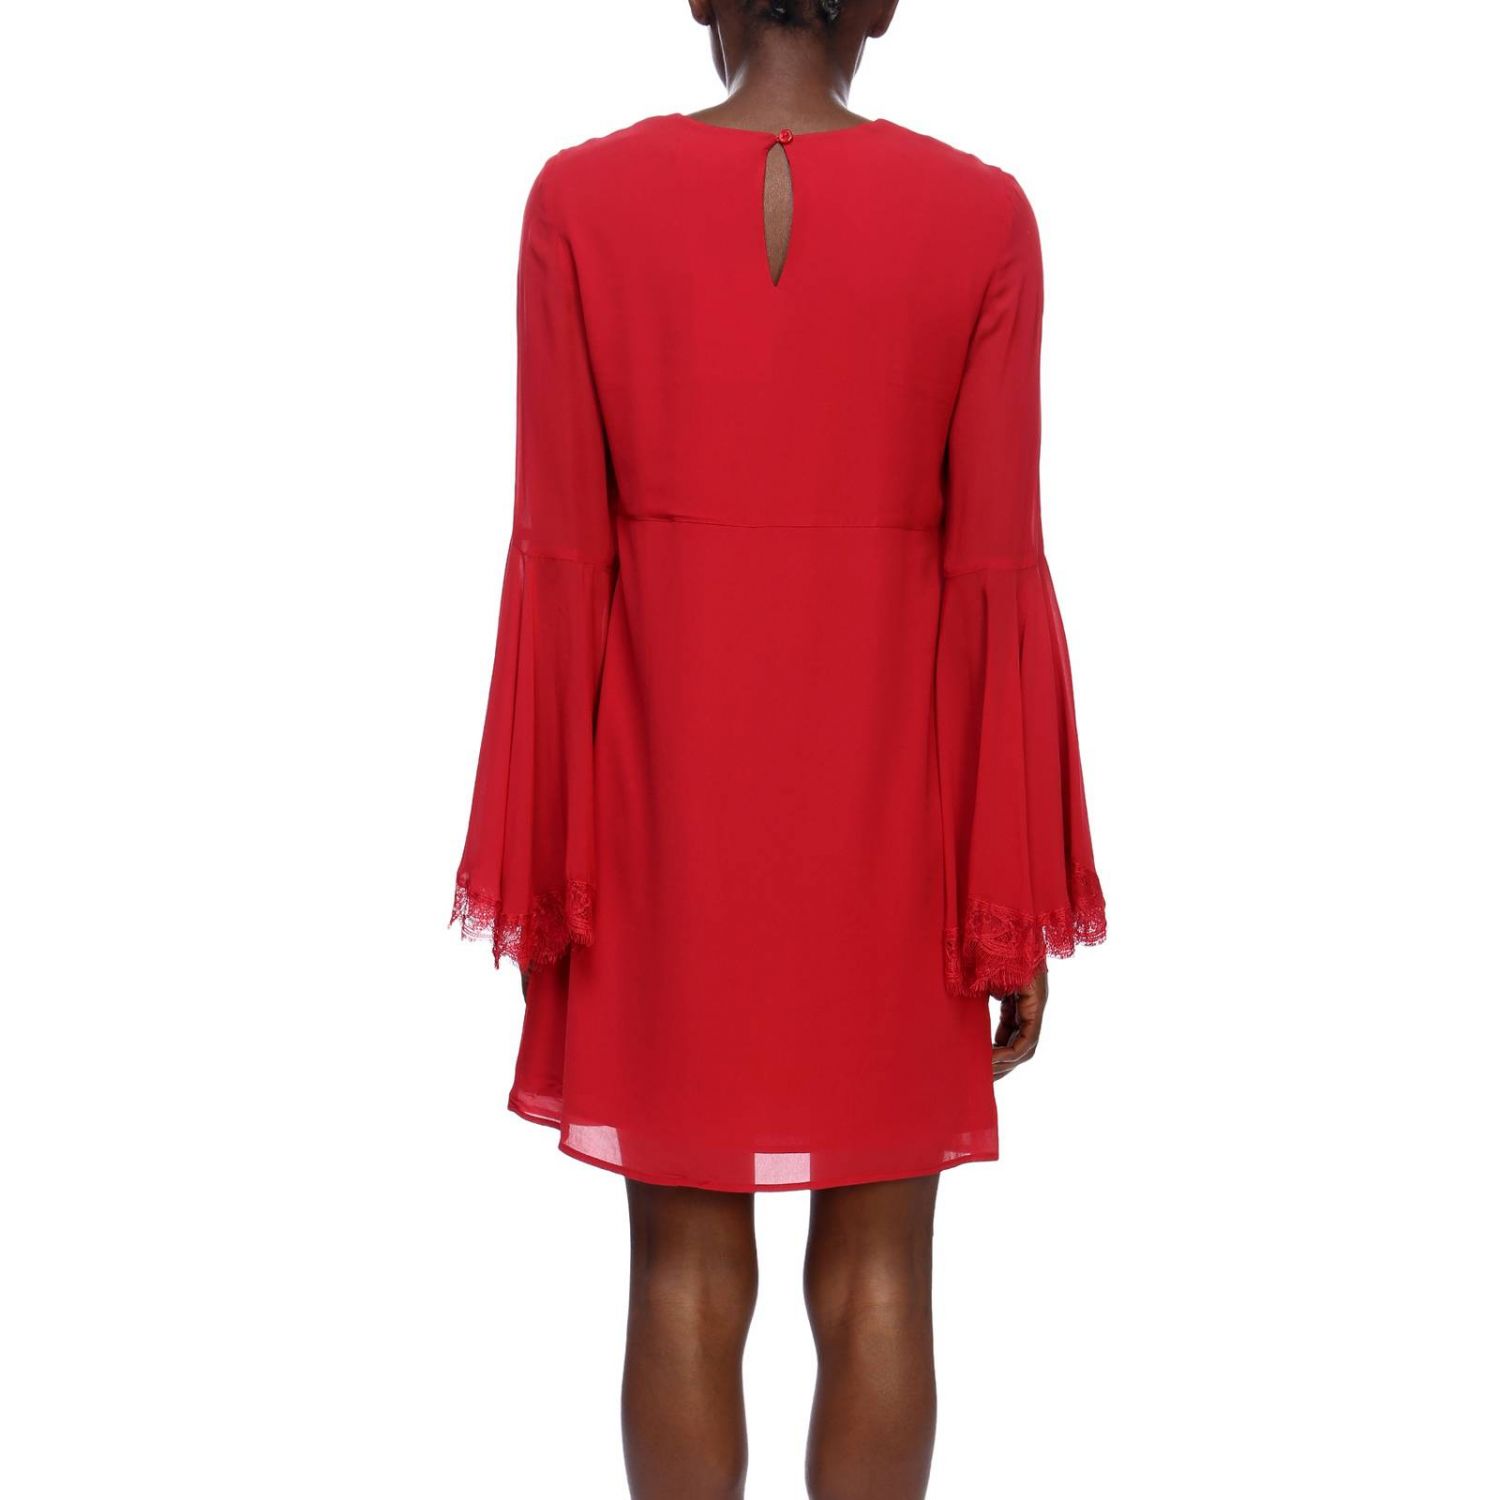 Twinset Outlet: dress for woman - Fuchsia | Twinset dress TA823B online ...